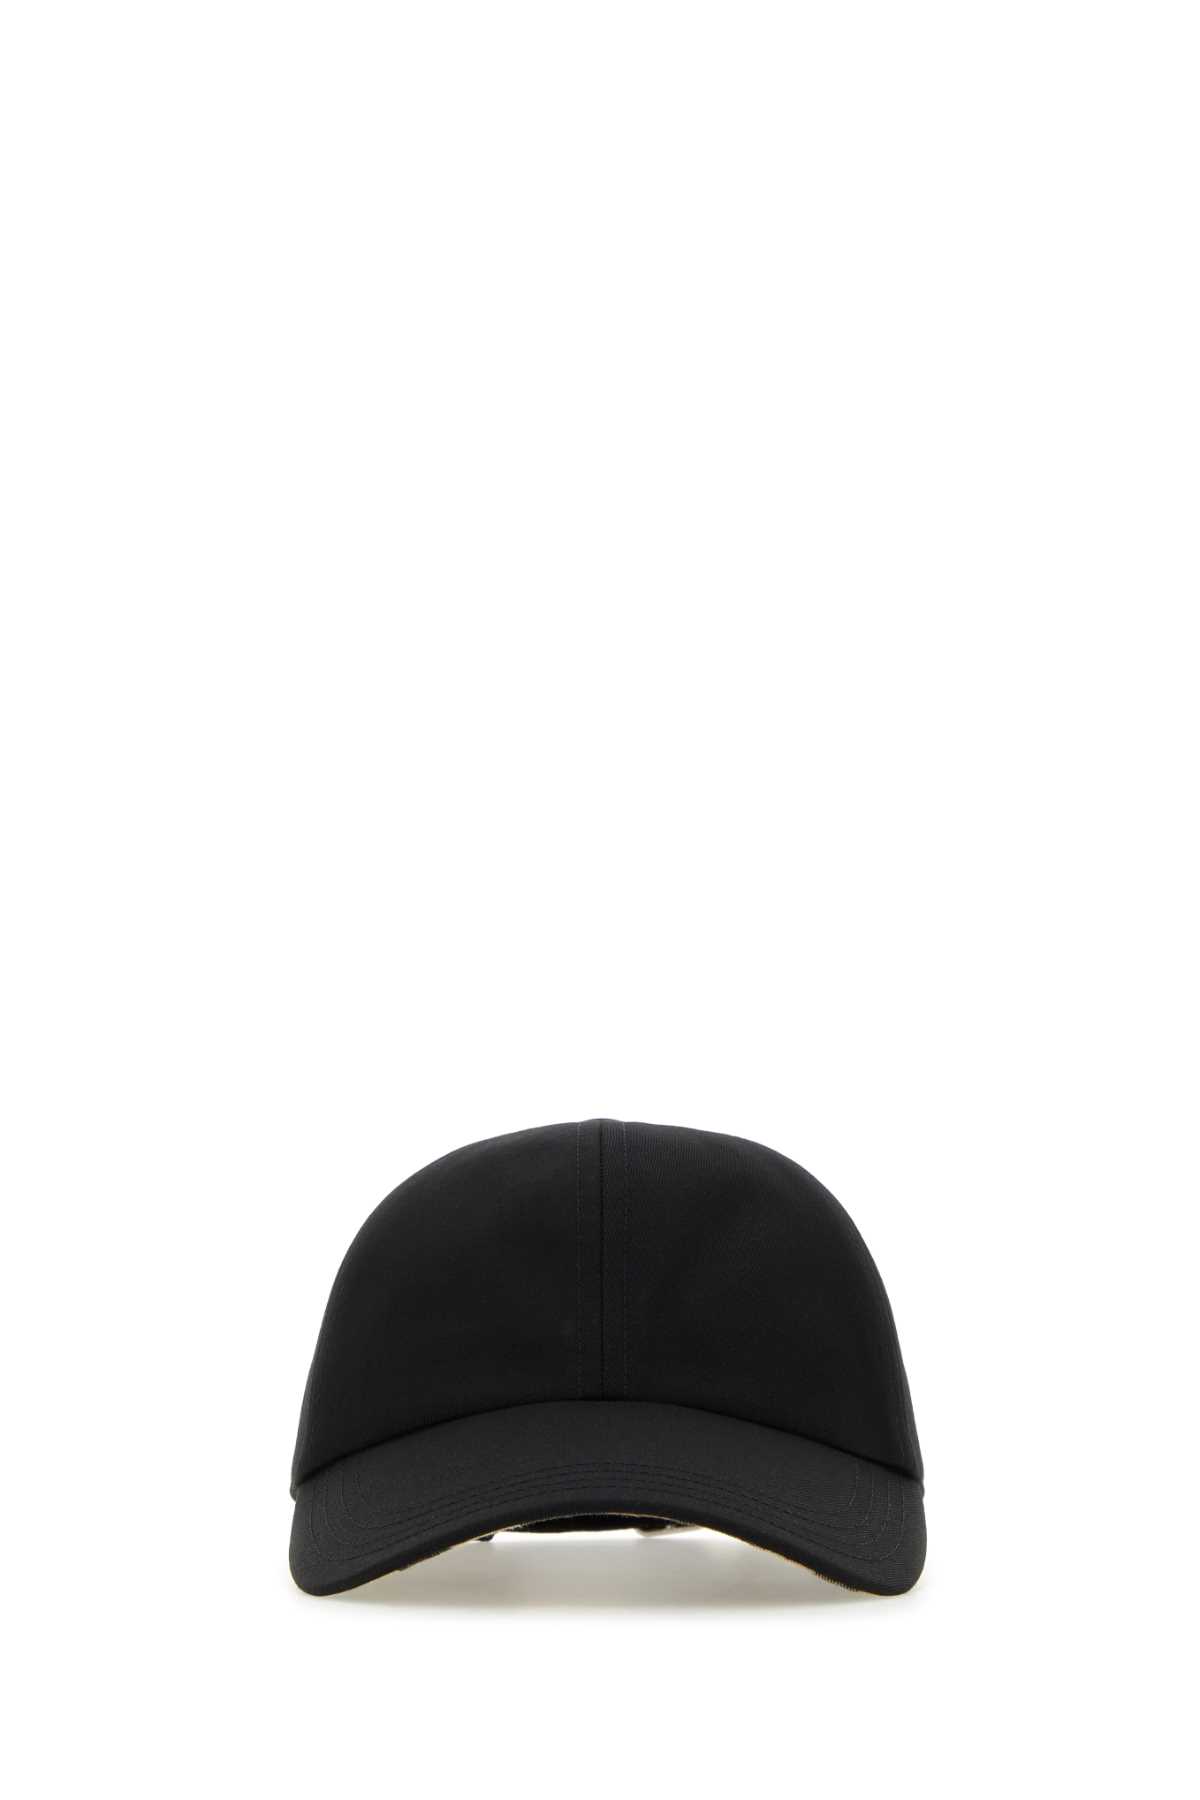 Shop Burberry Black Polyester Blend Baseball Cap